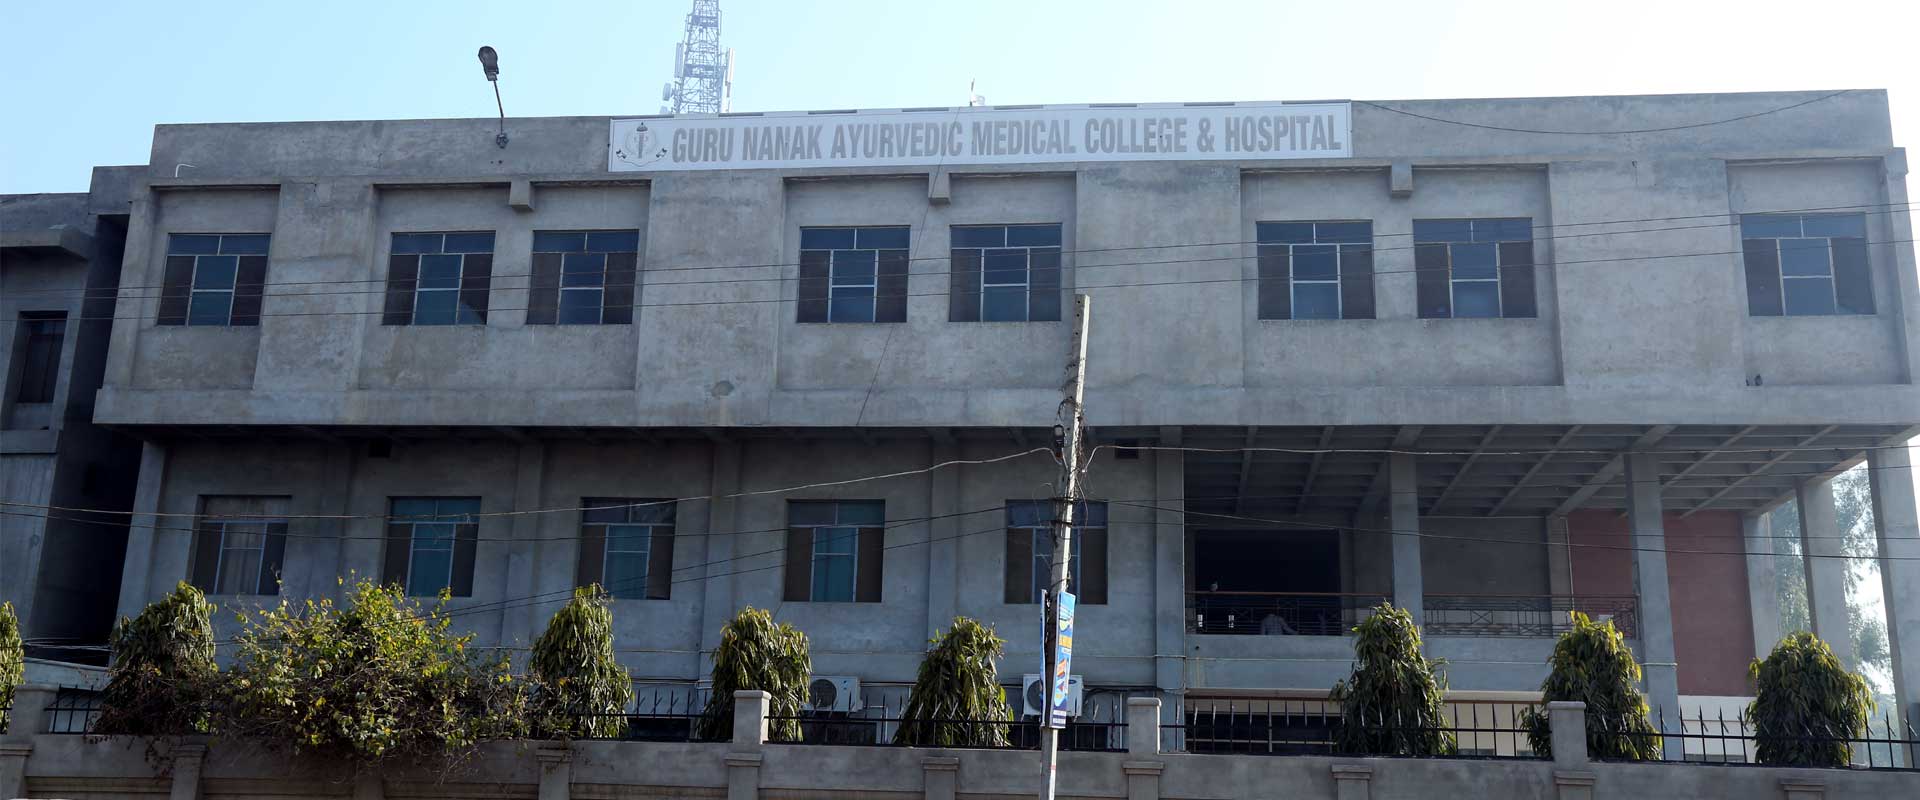 Guru Nanak Ayurvedic Medical College and Hospital, Muktsar Image